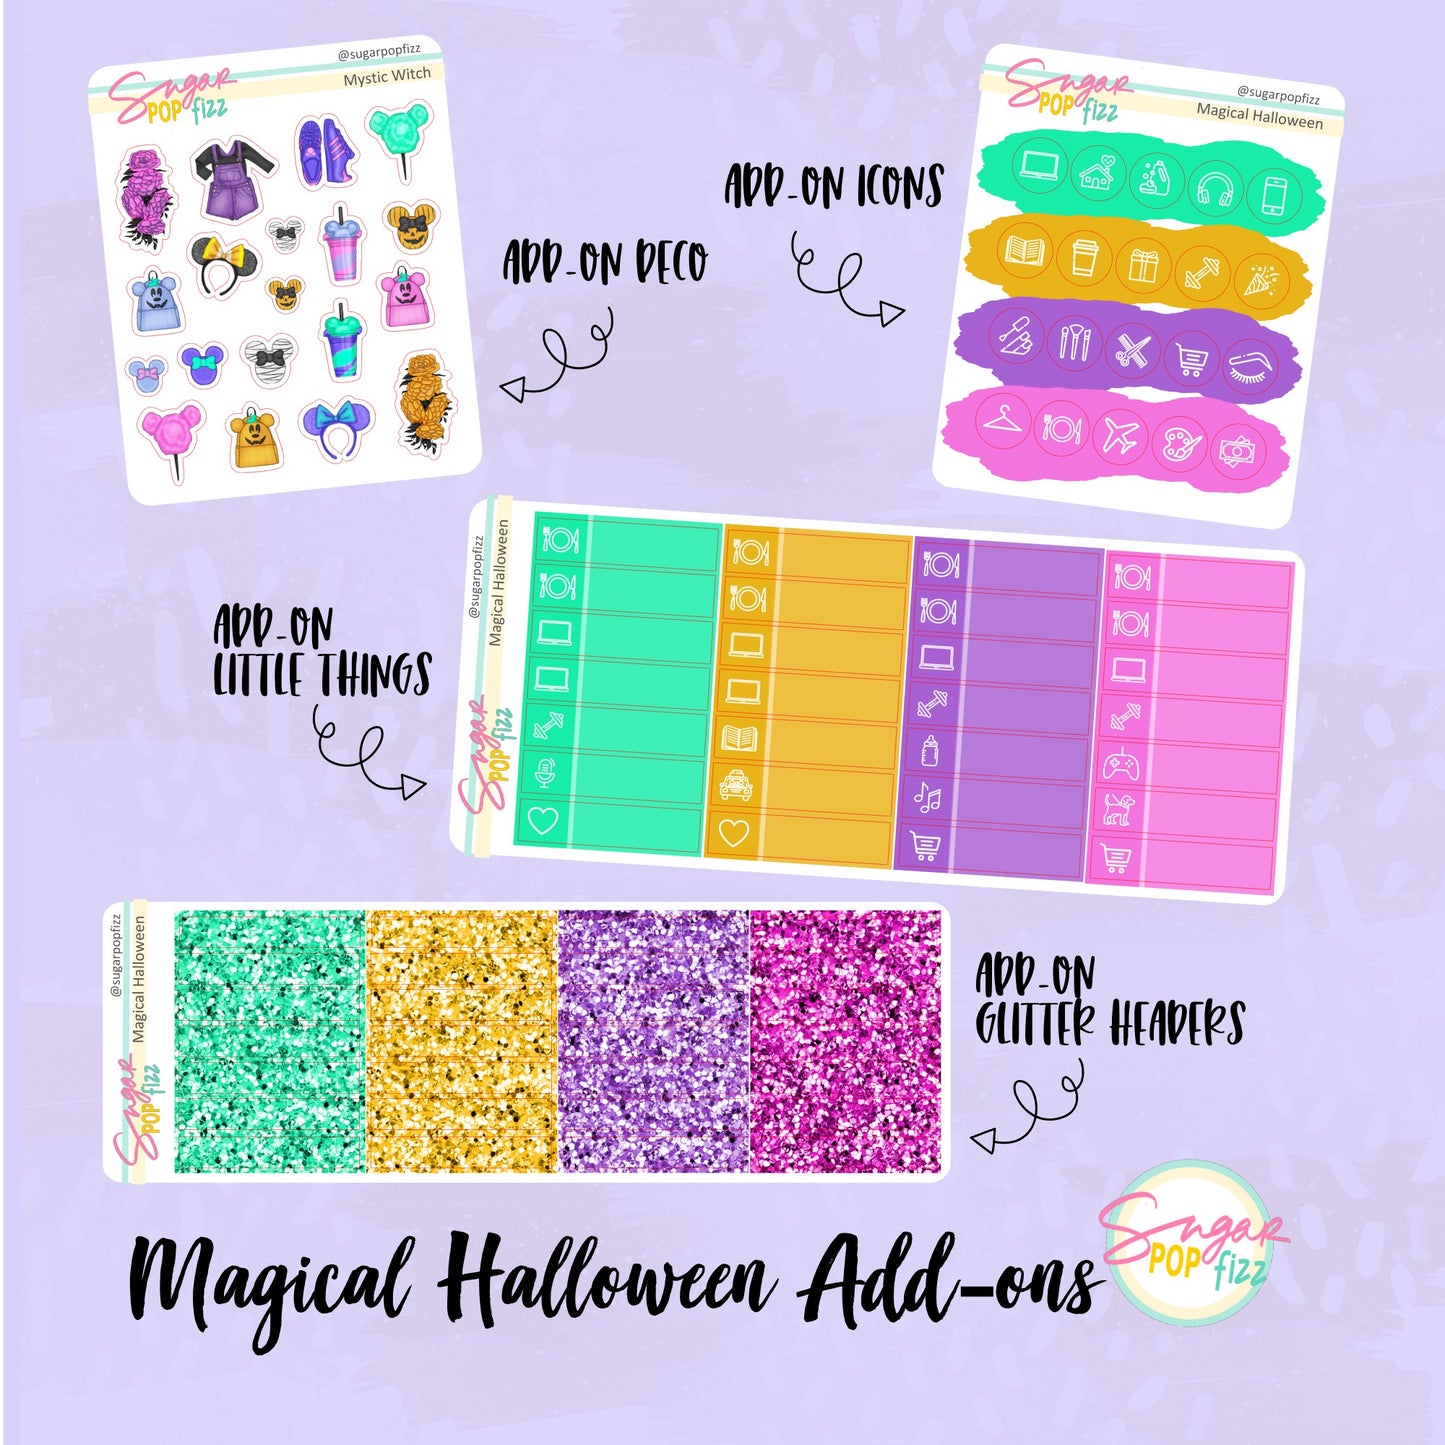 Magical Halloween Weekly Kit Add-ons